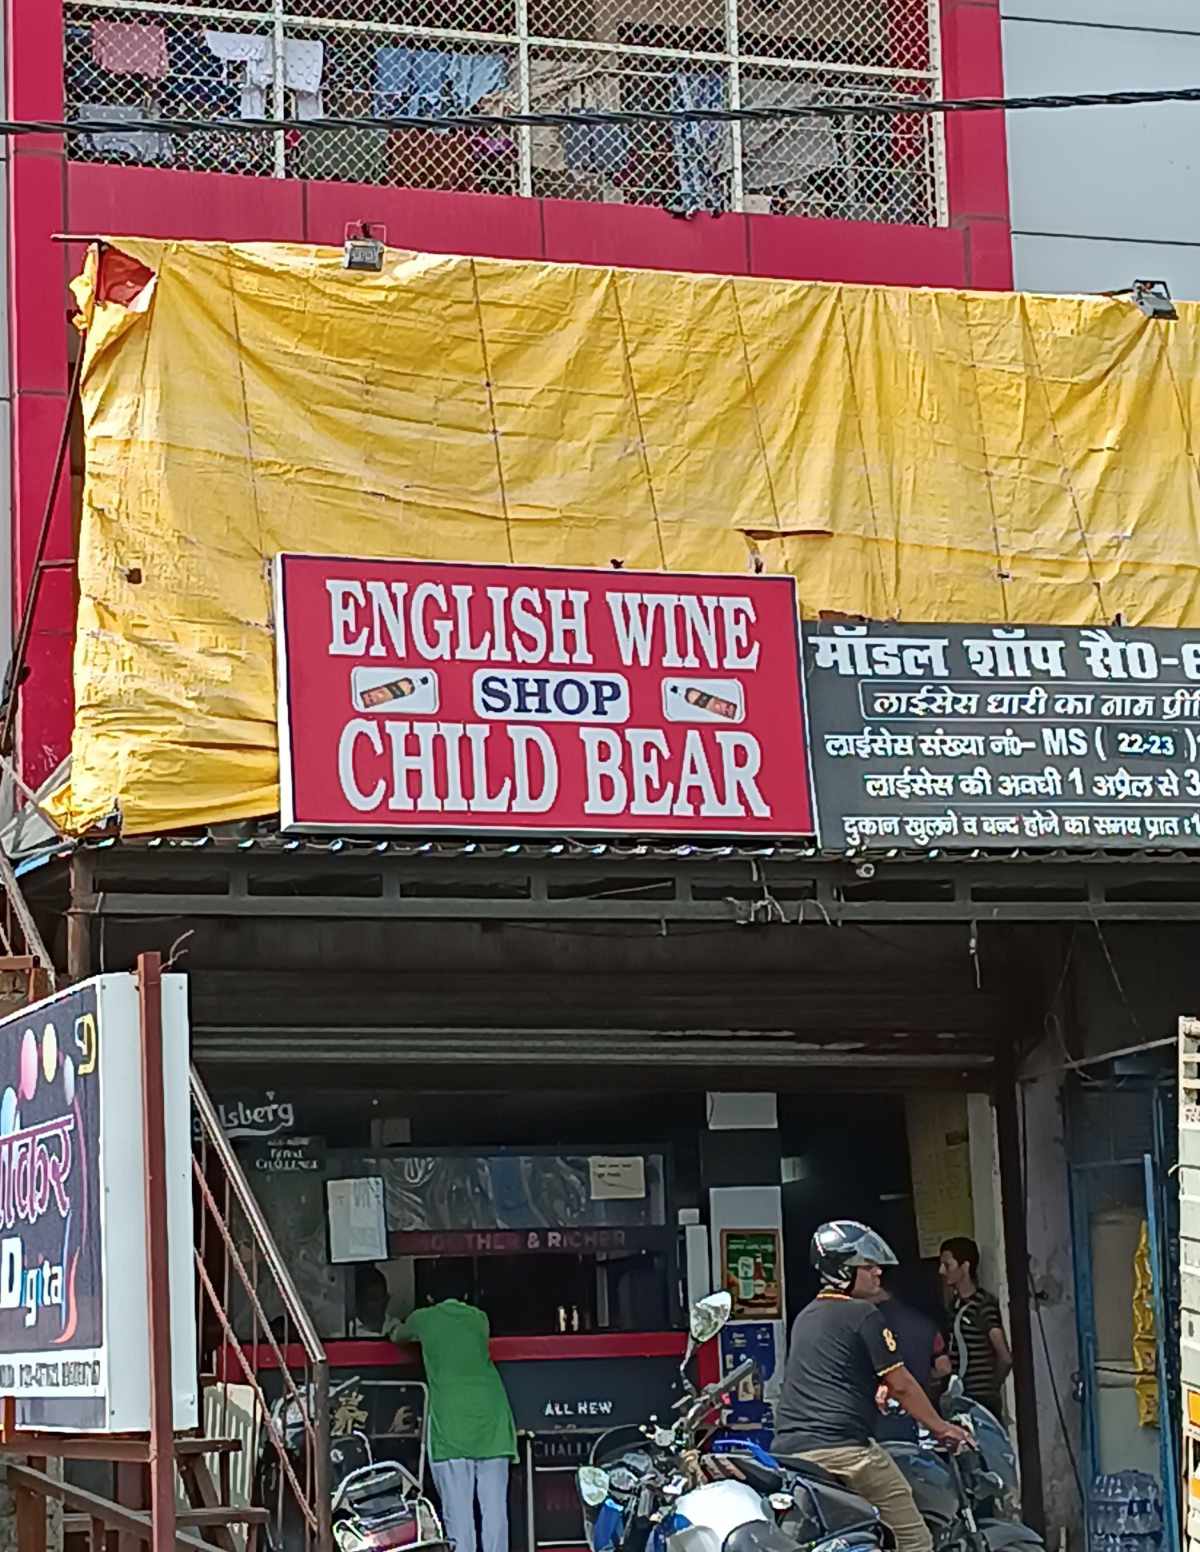 An interesting liquor shop in Delhi serving Child Bears